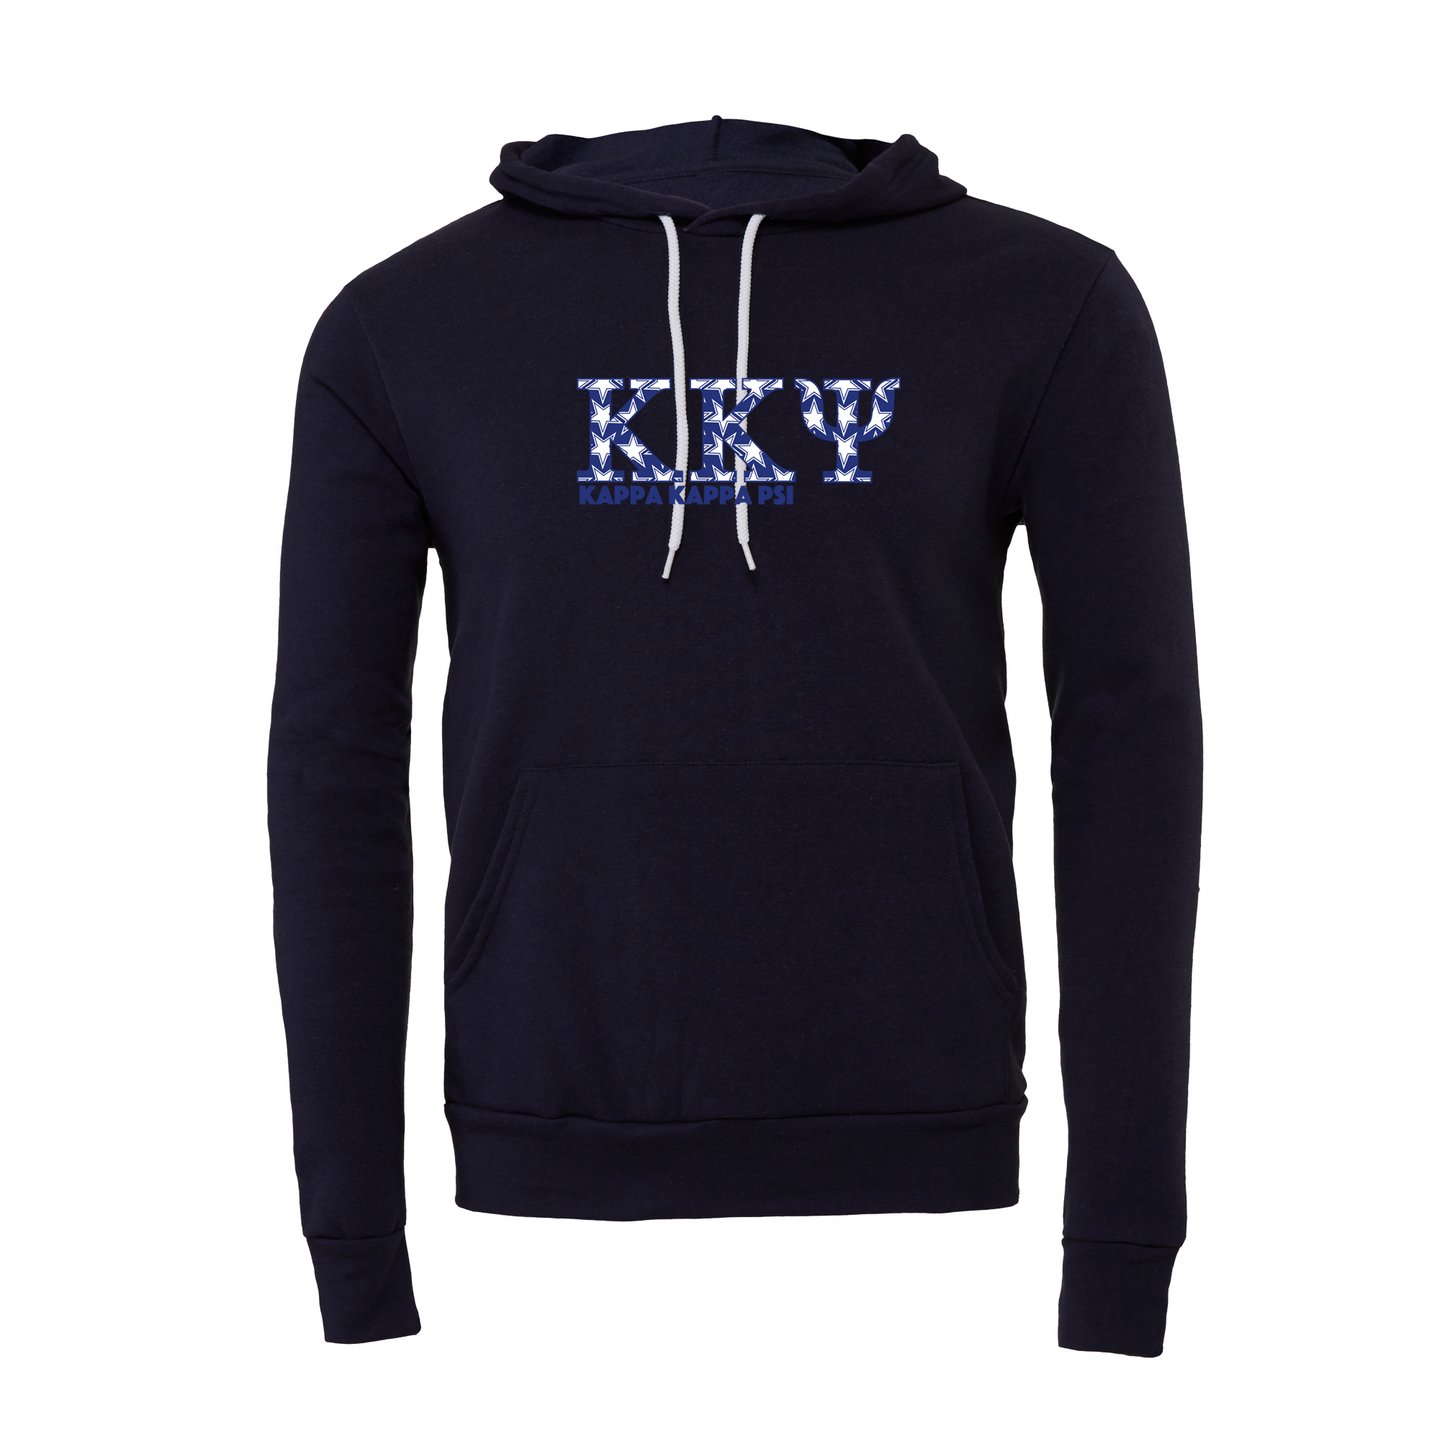 Kappa Kappa Psi Applique Letters Hooded Sweatshirt